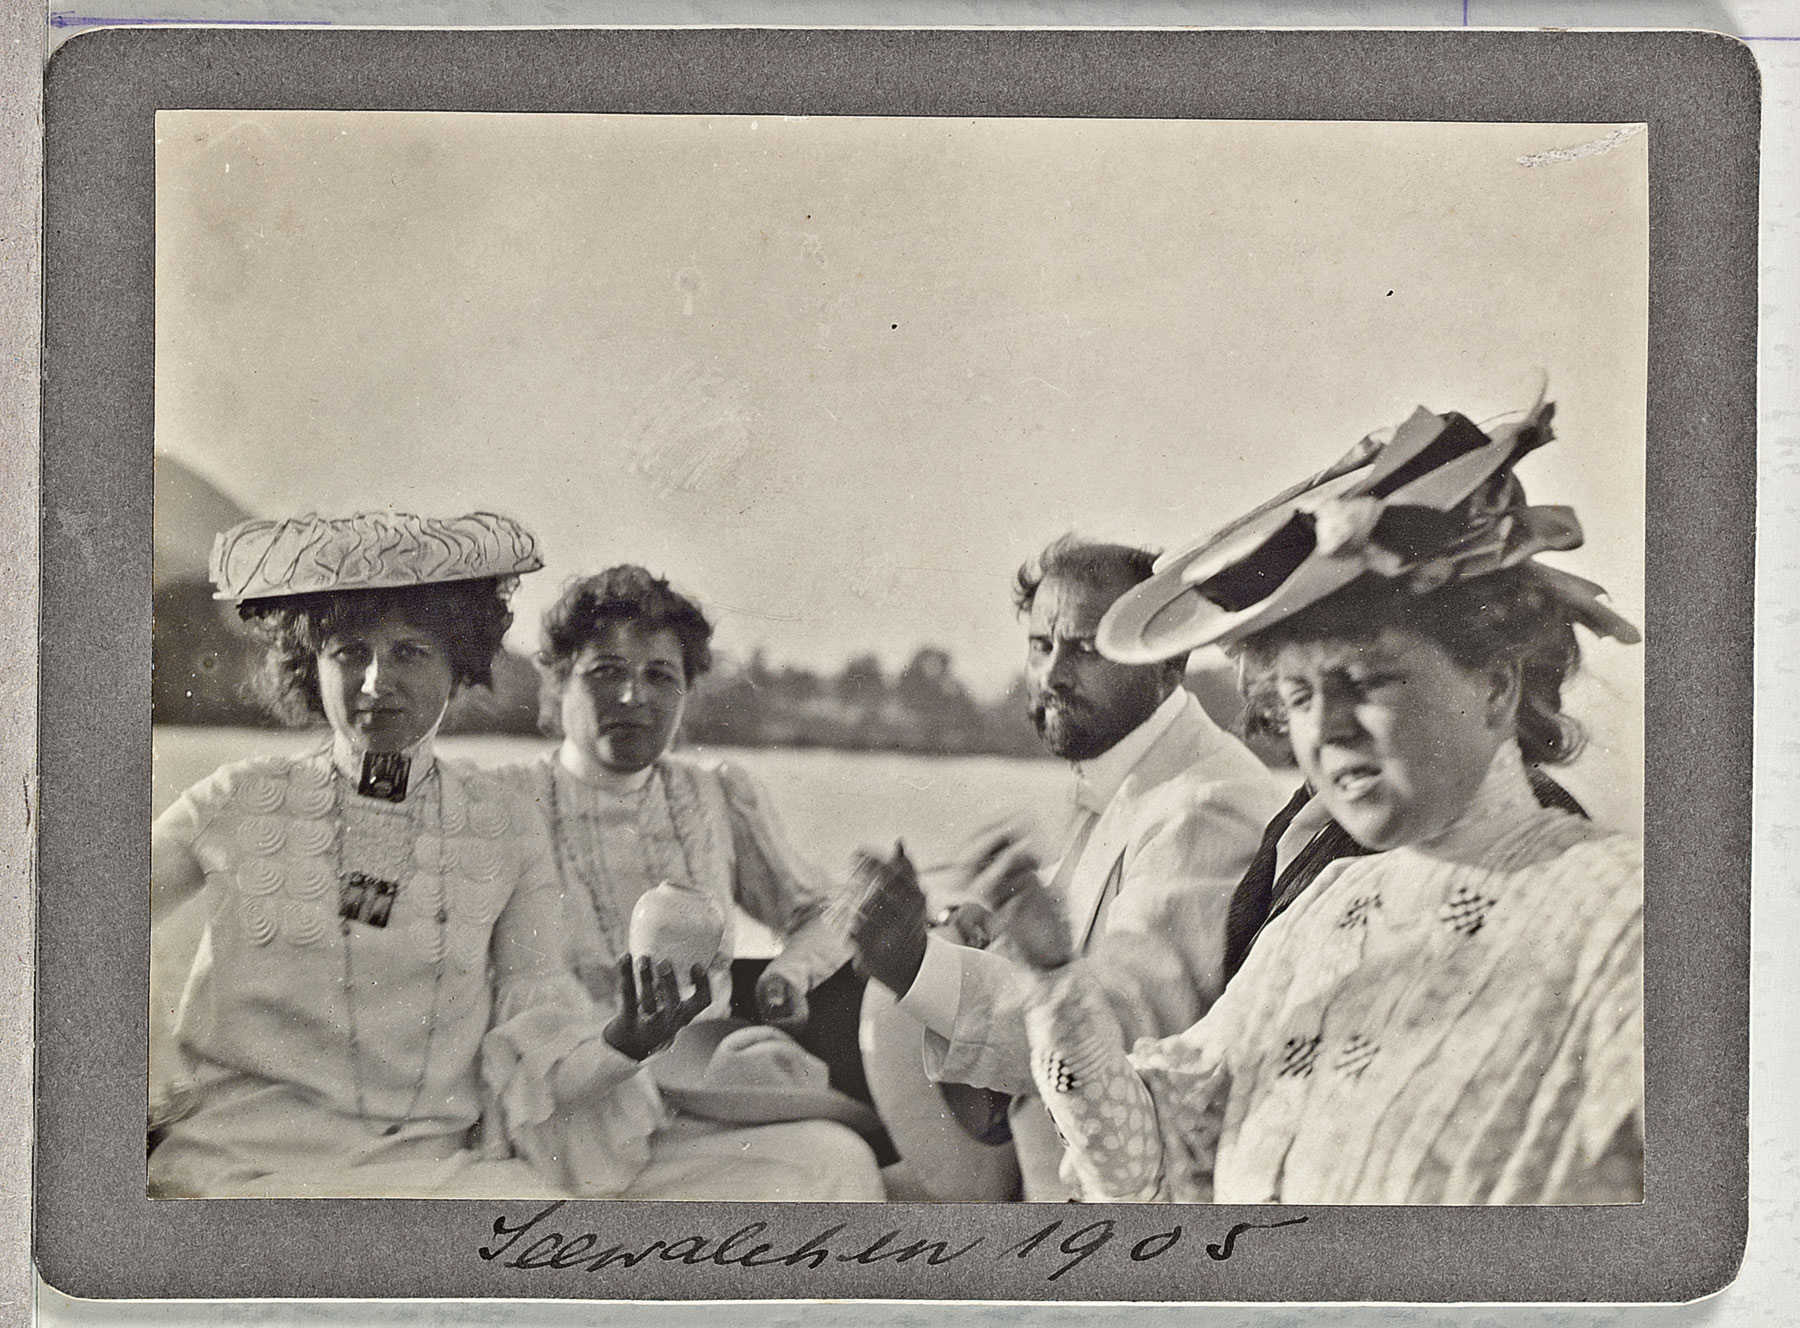 Emilie, Hermine e Pauline FlÃ¶ge, Gustav Klimt e Hermann FlÃ¶ge in barca sull'Attersee fotografati da Emma Bacher (1905) Â©Klimt Foundation,Vienna
